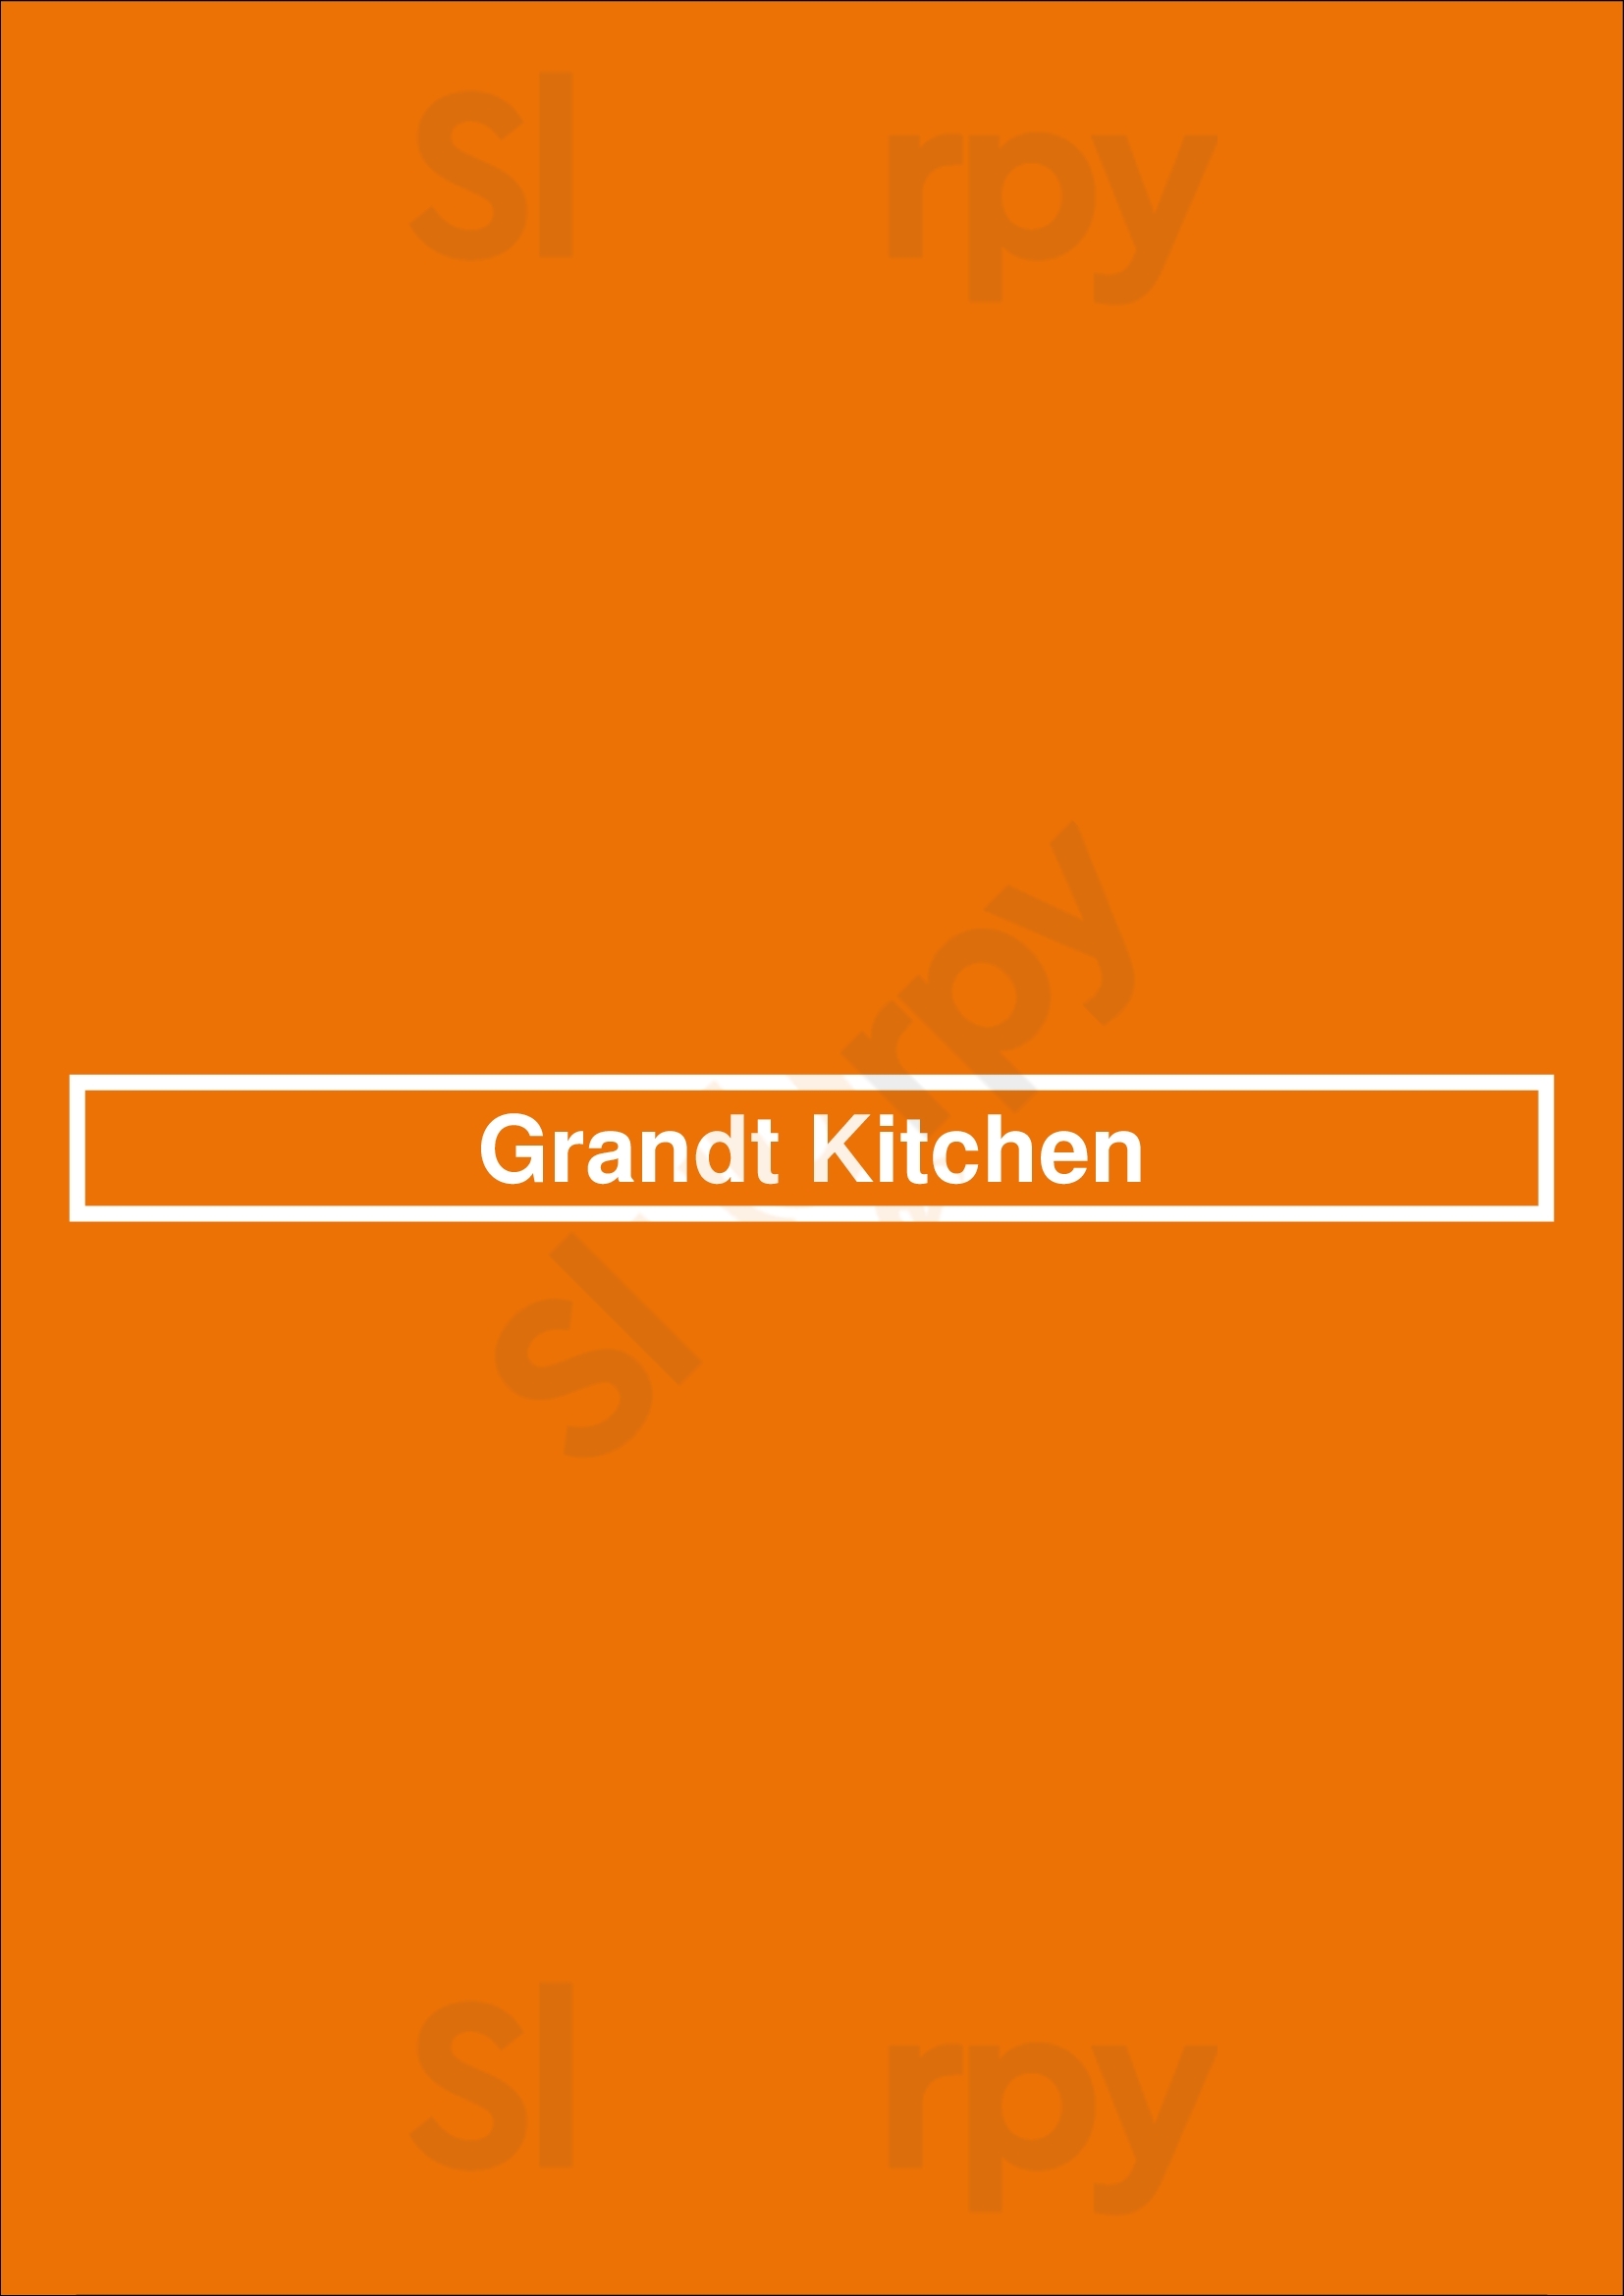 Grandt Kitchen Vancouver Menu - 1